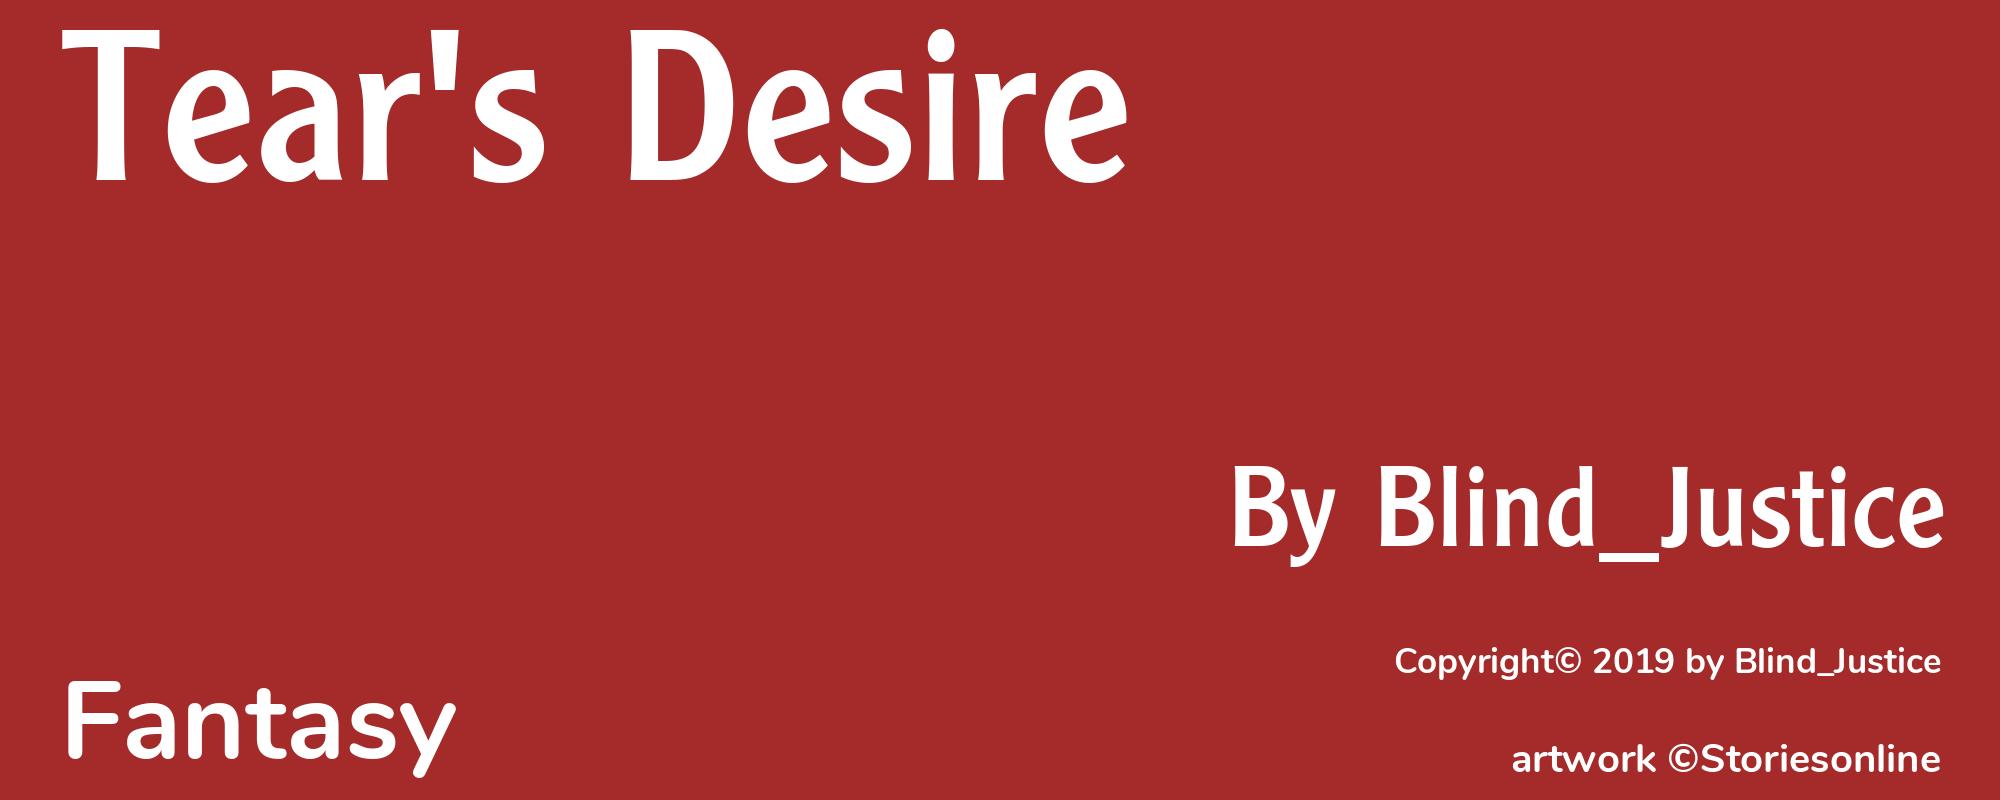 Tear's Desire - Cover